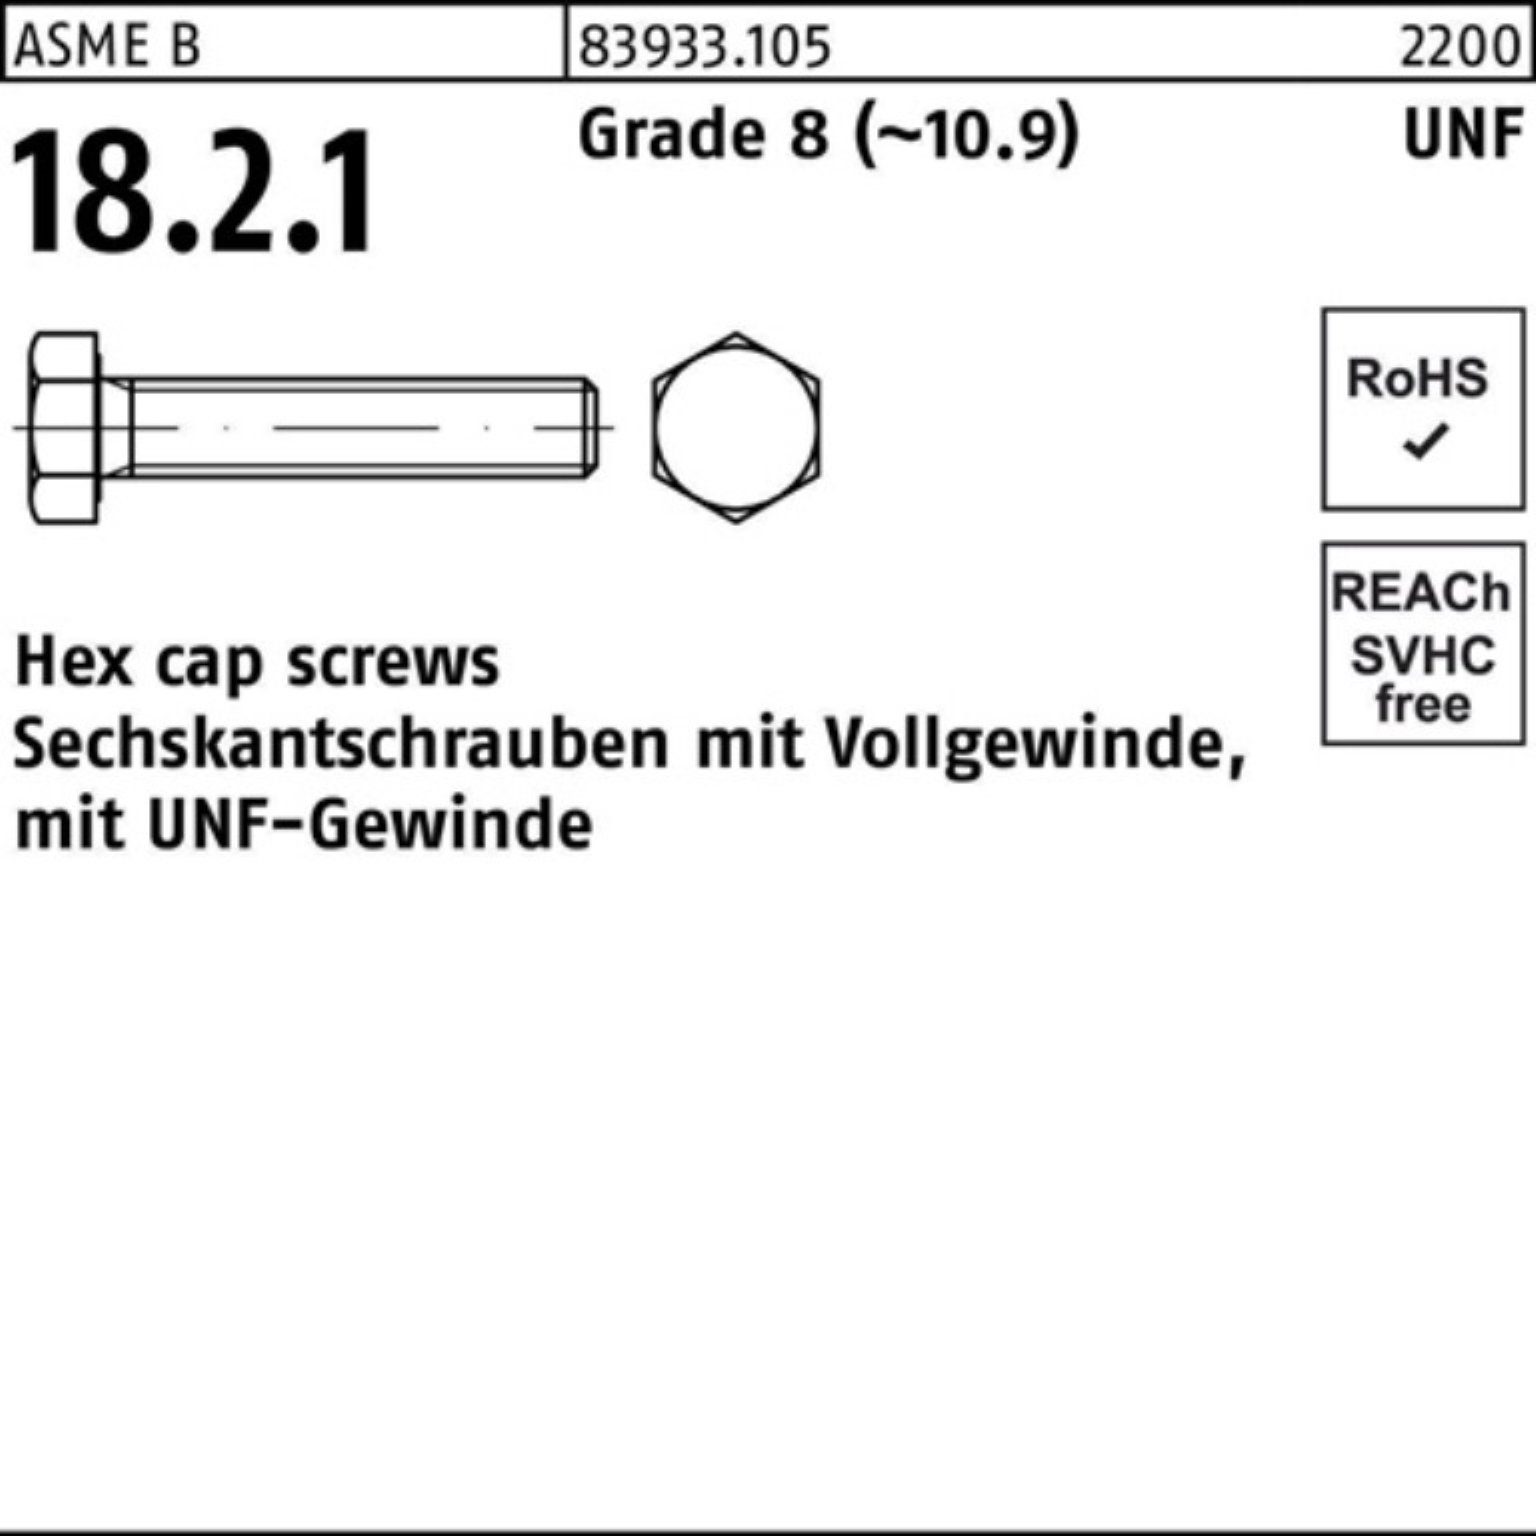 Reyher Sechskantschraube 100er Pack Sechskantschraube R 83933 UNF-Gewinde VG 7/16x 1 1/2 Grade